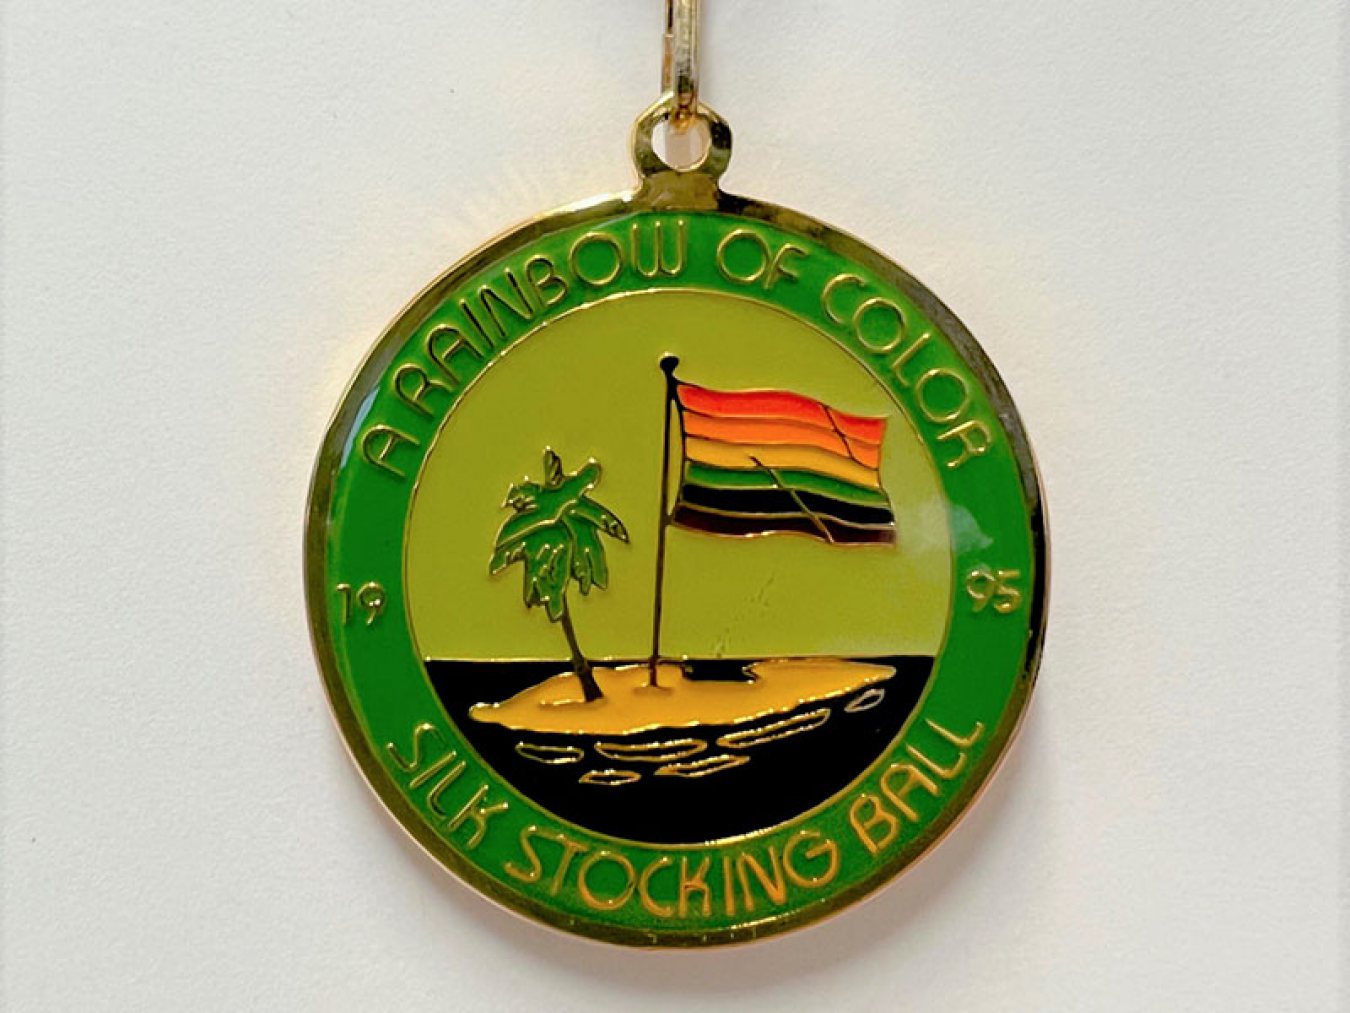 Silk Stocking Ball medallion